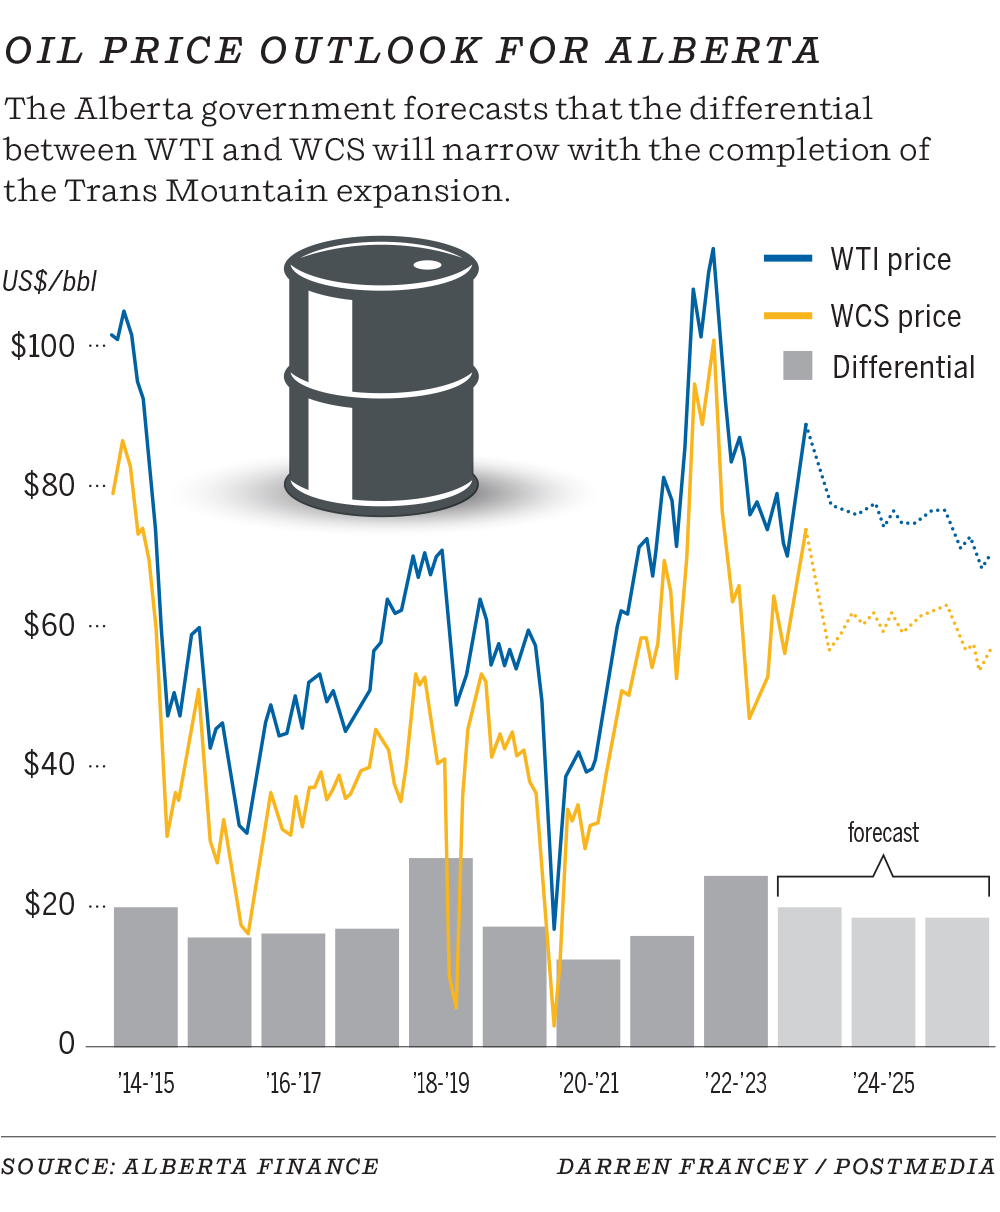 Oil price forecast for Alberta